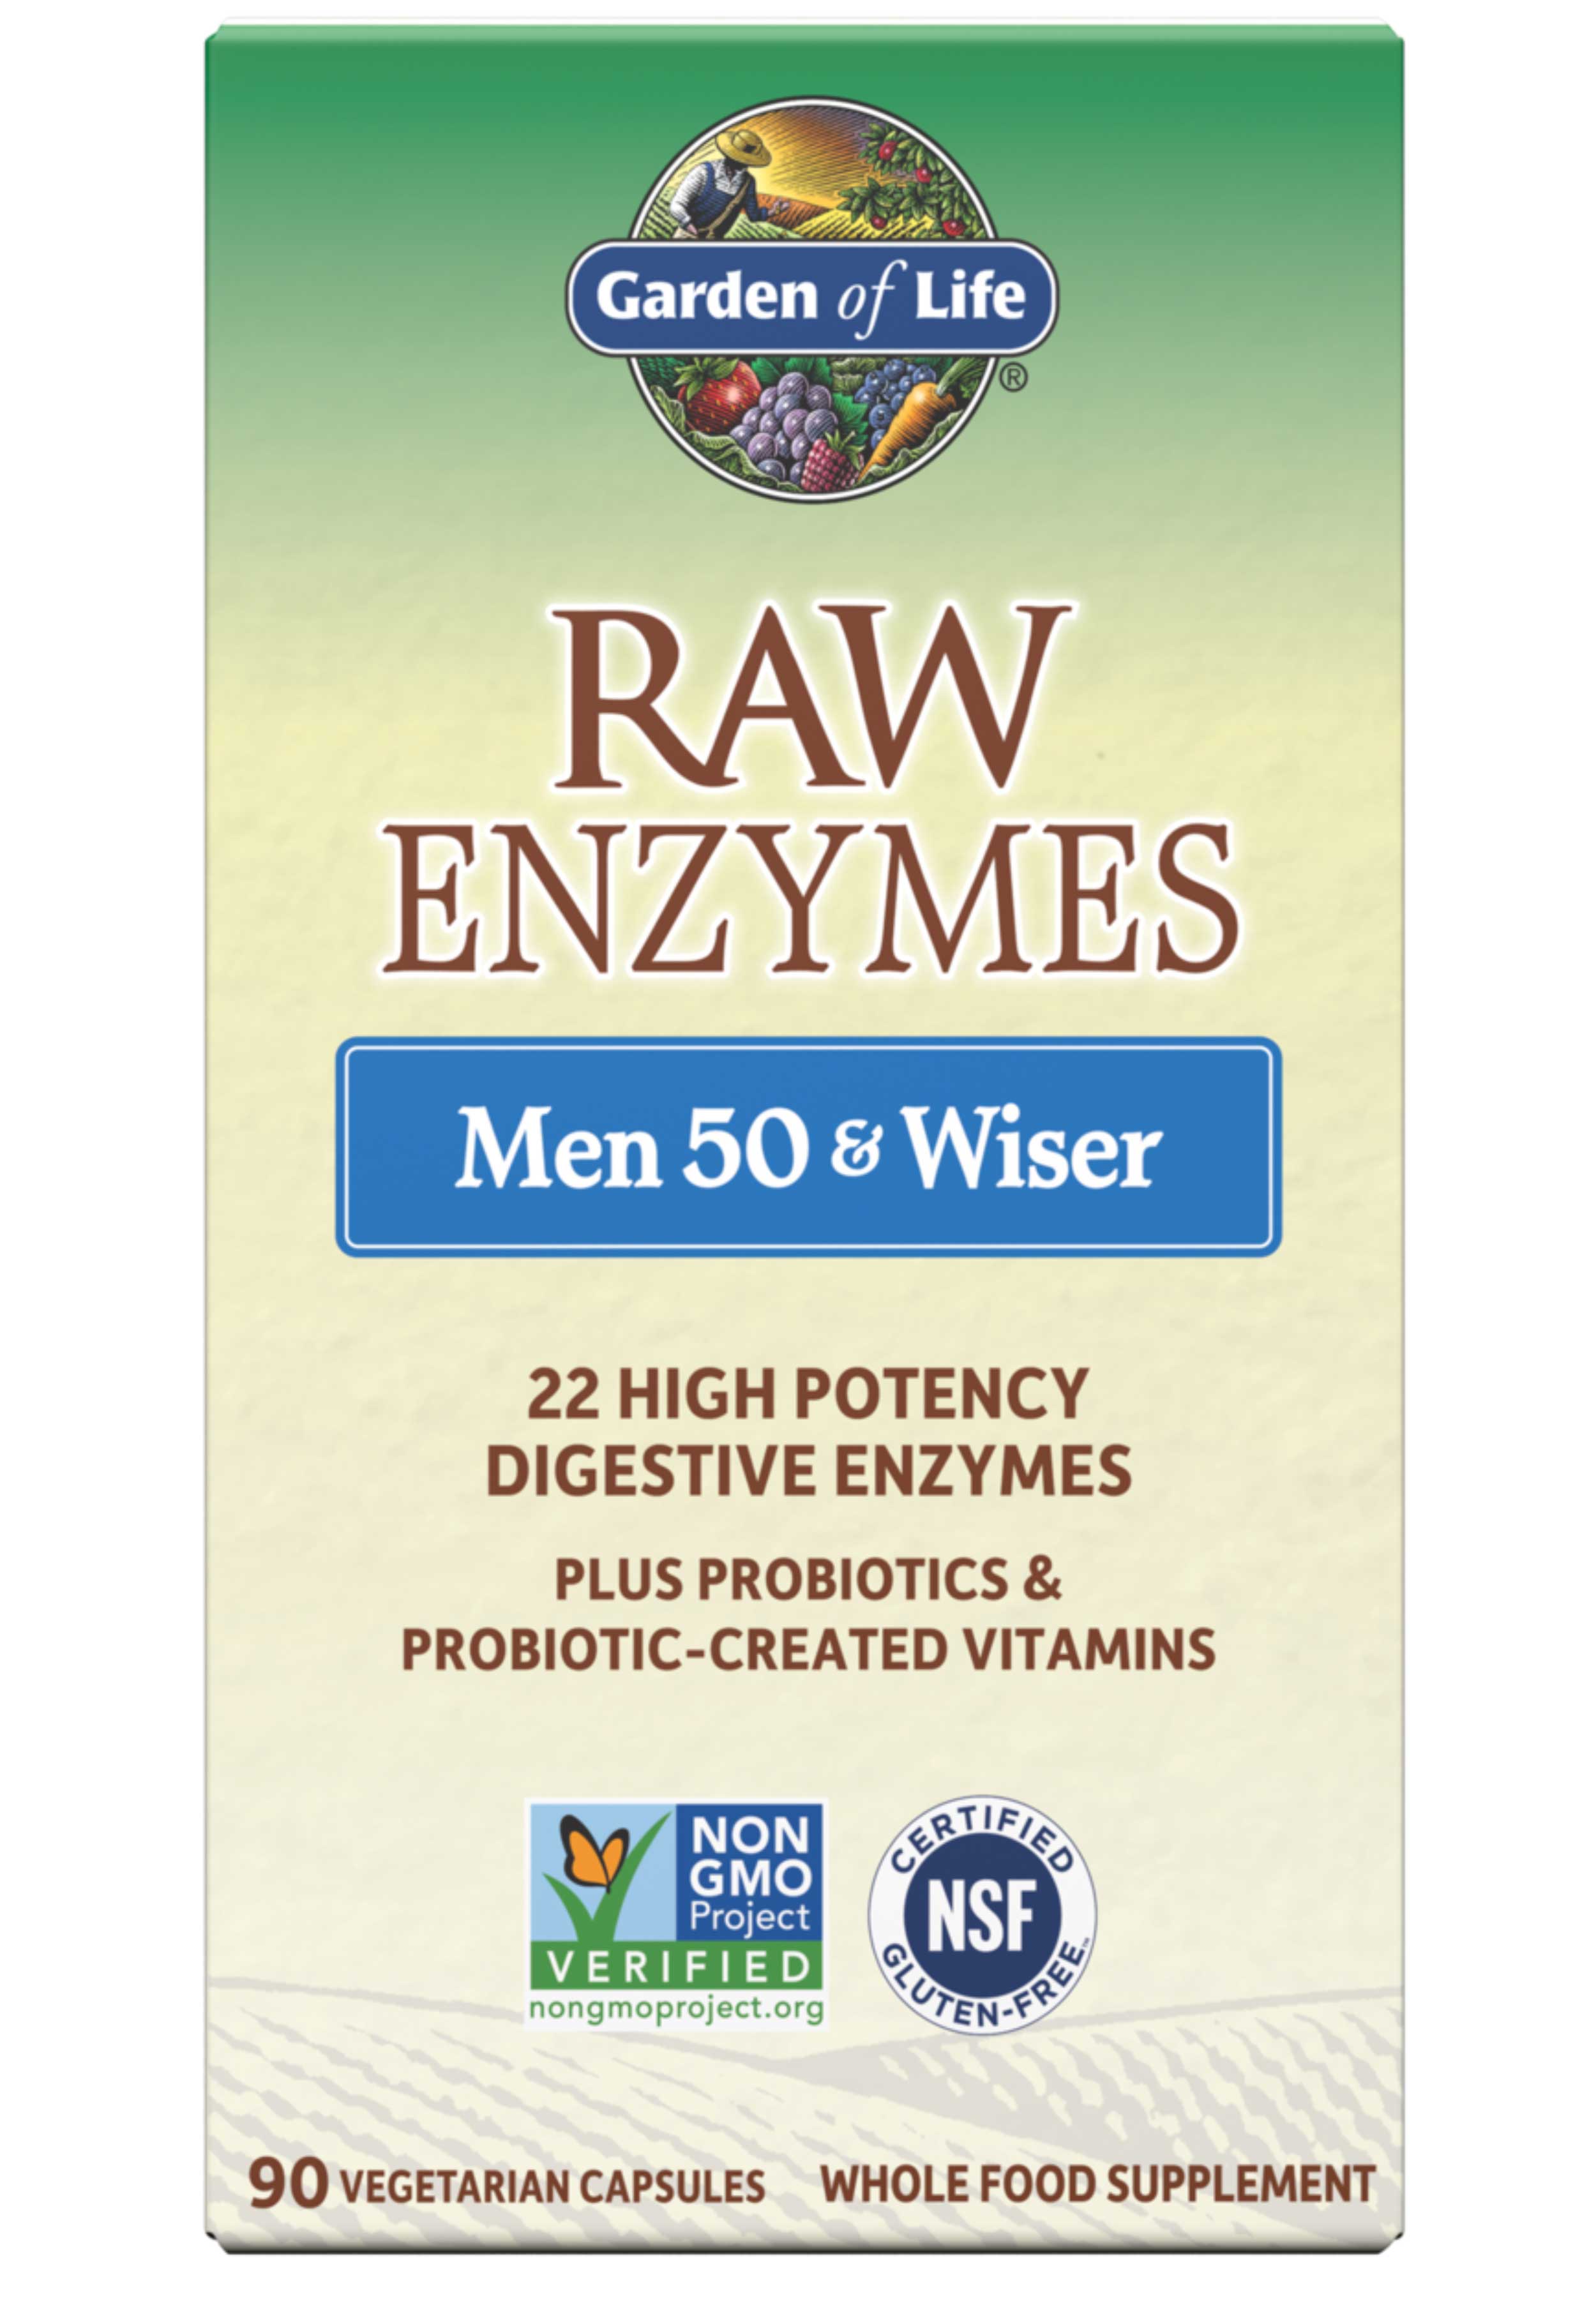 Garden of Life RAW Enzymes Men 50 & Wiser